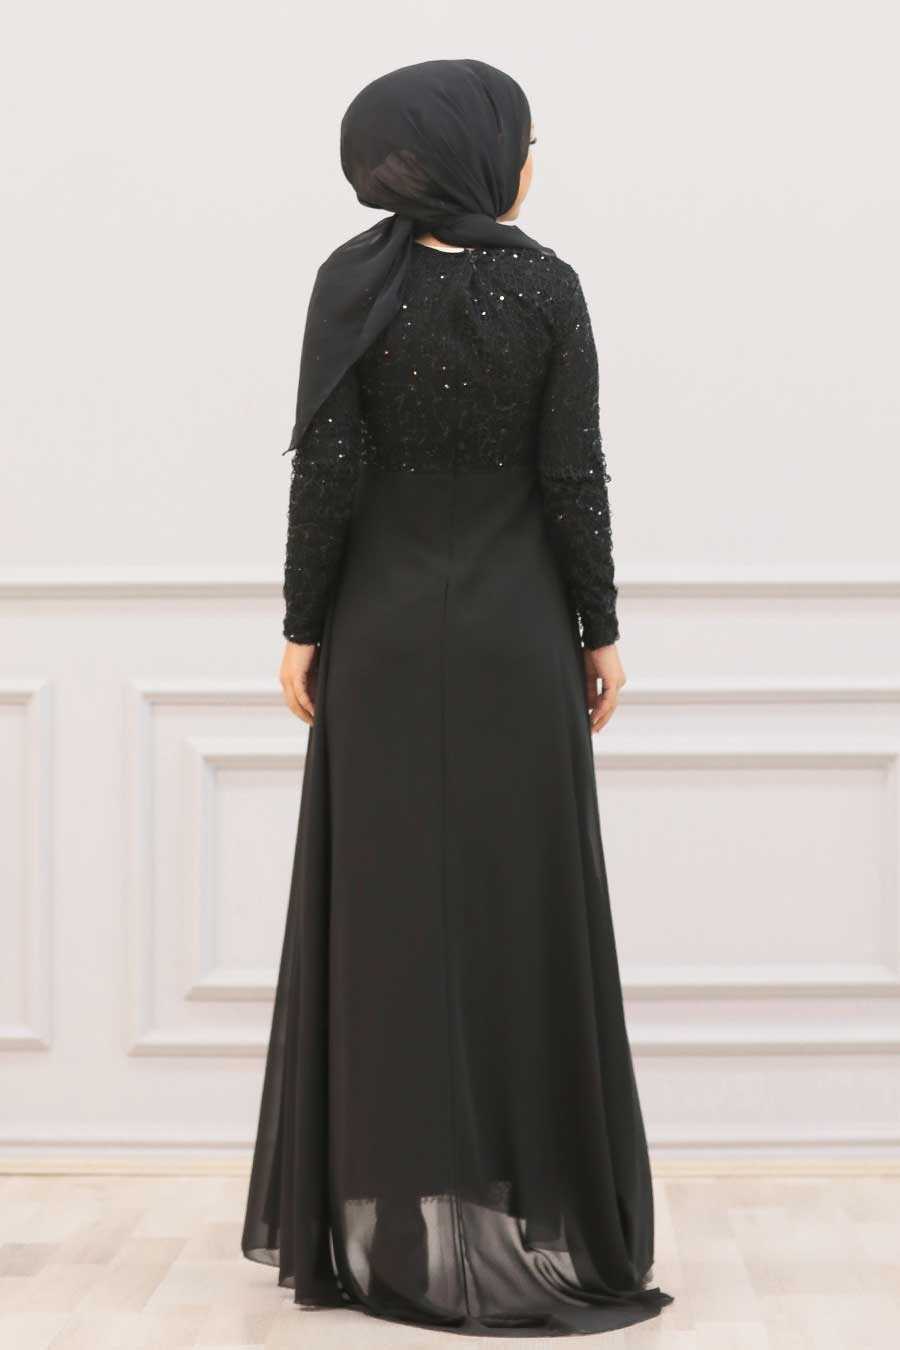  Plus Size Black Modest Wedding Dress 90000S